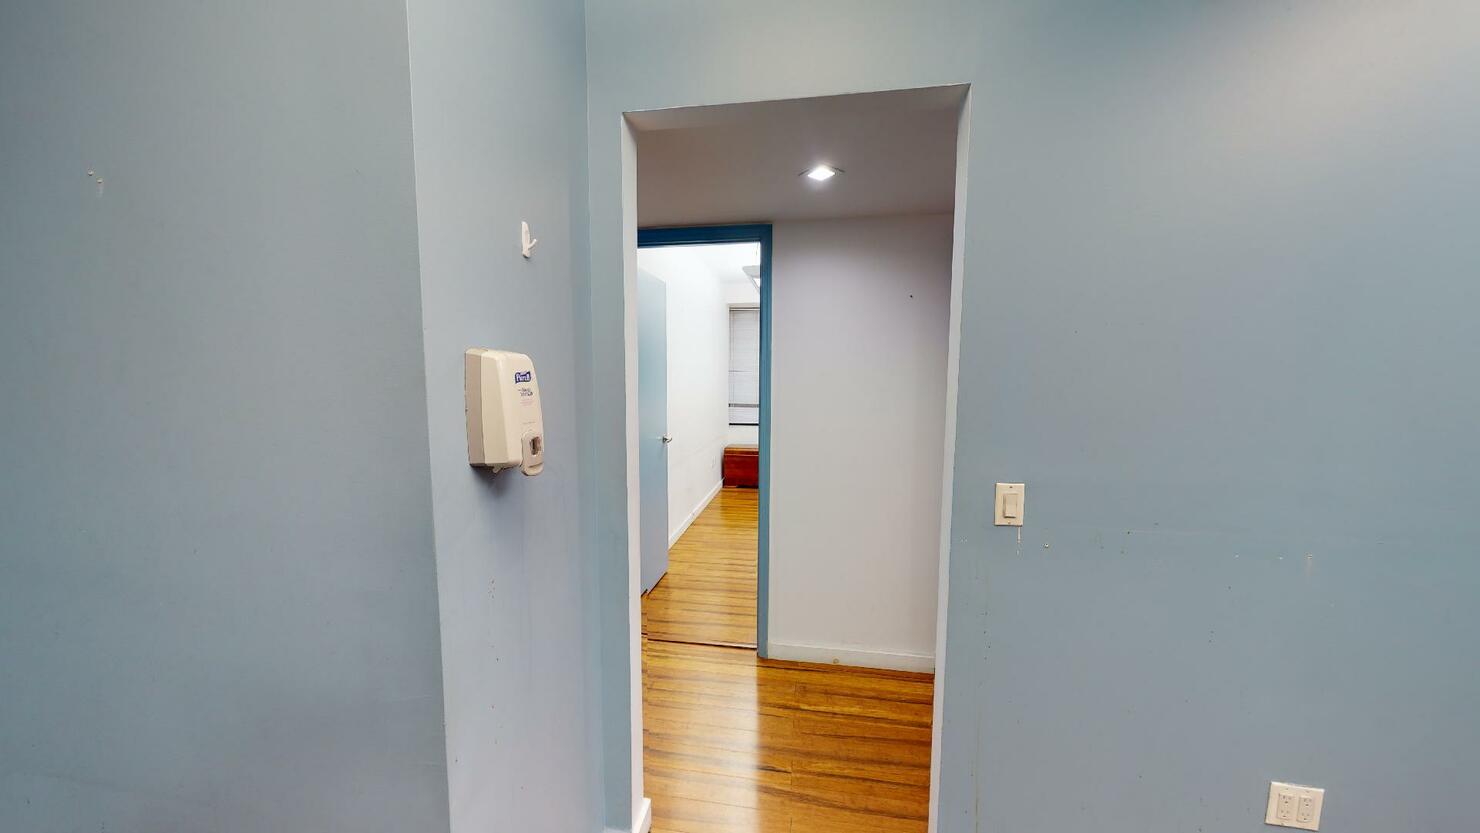 369 Lexington Avenue Office Space - Light Blue Walls and Hardwood Floor